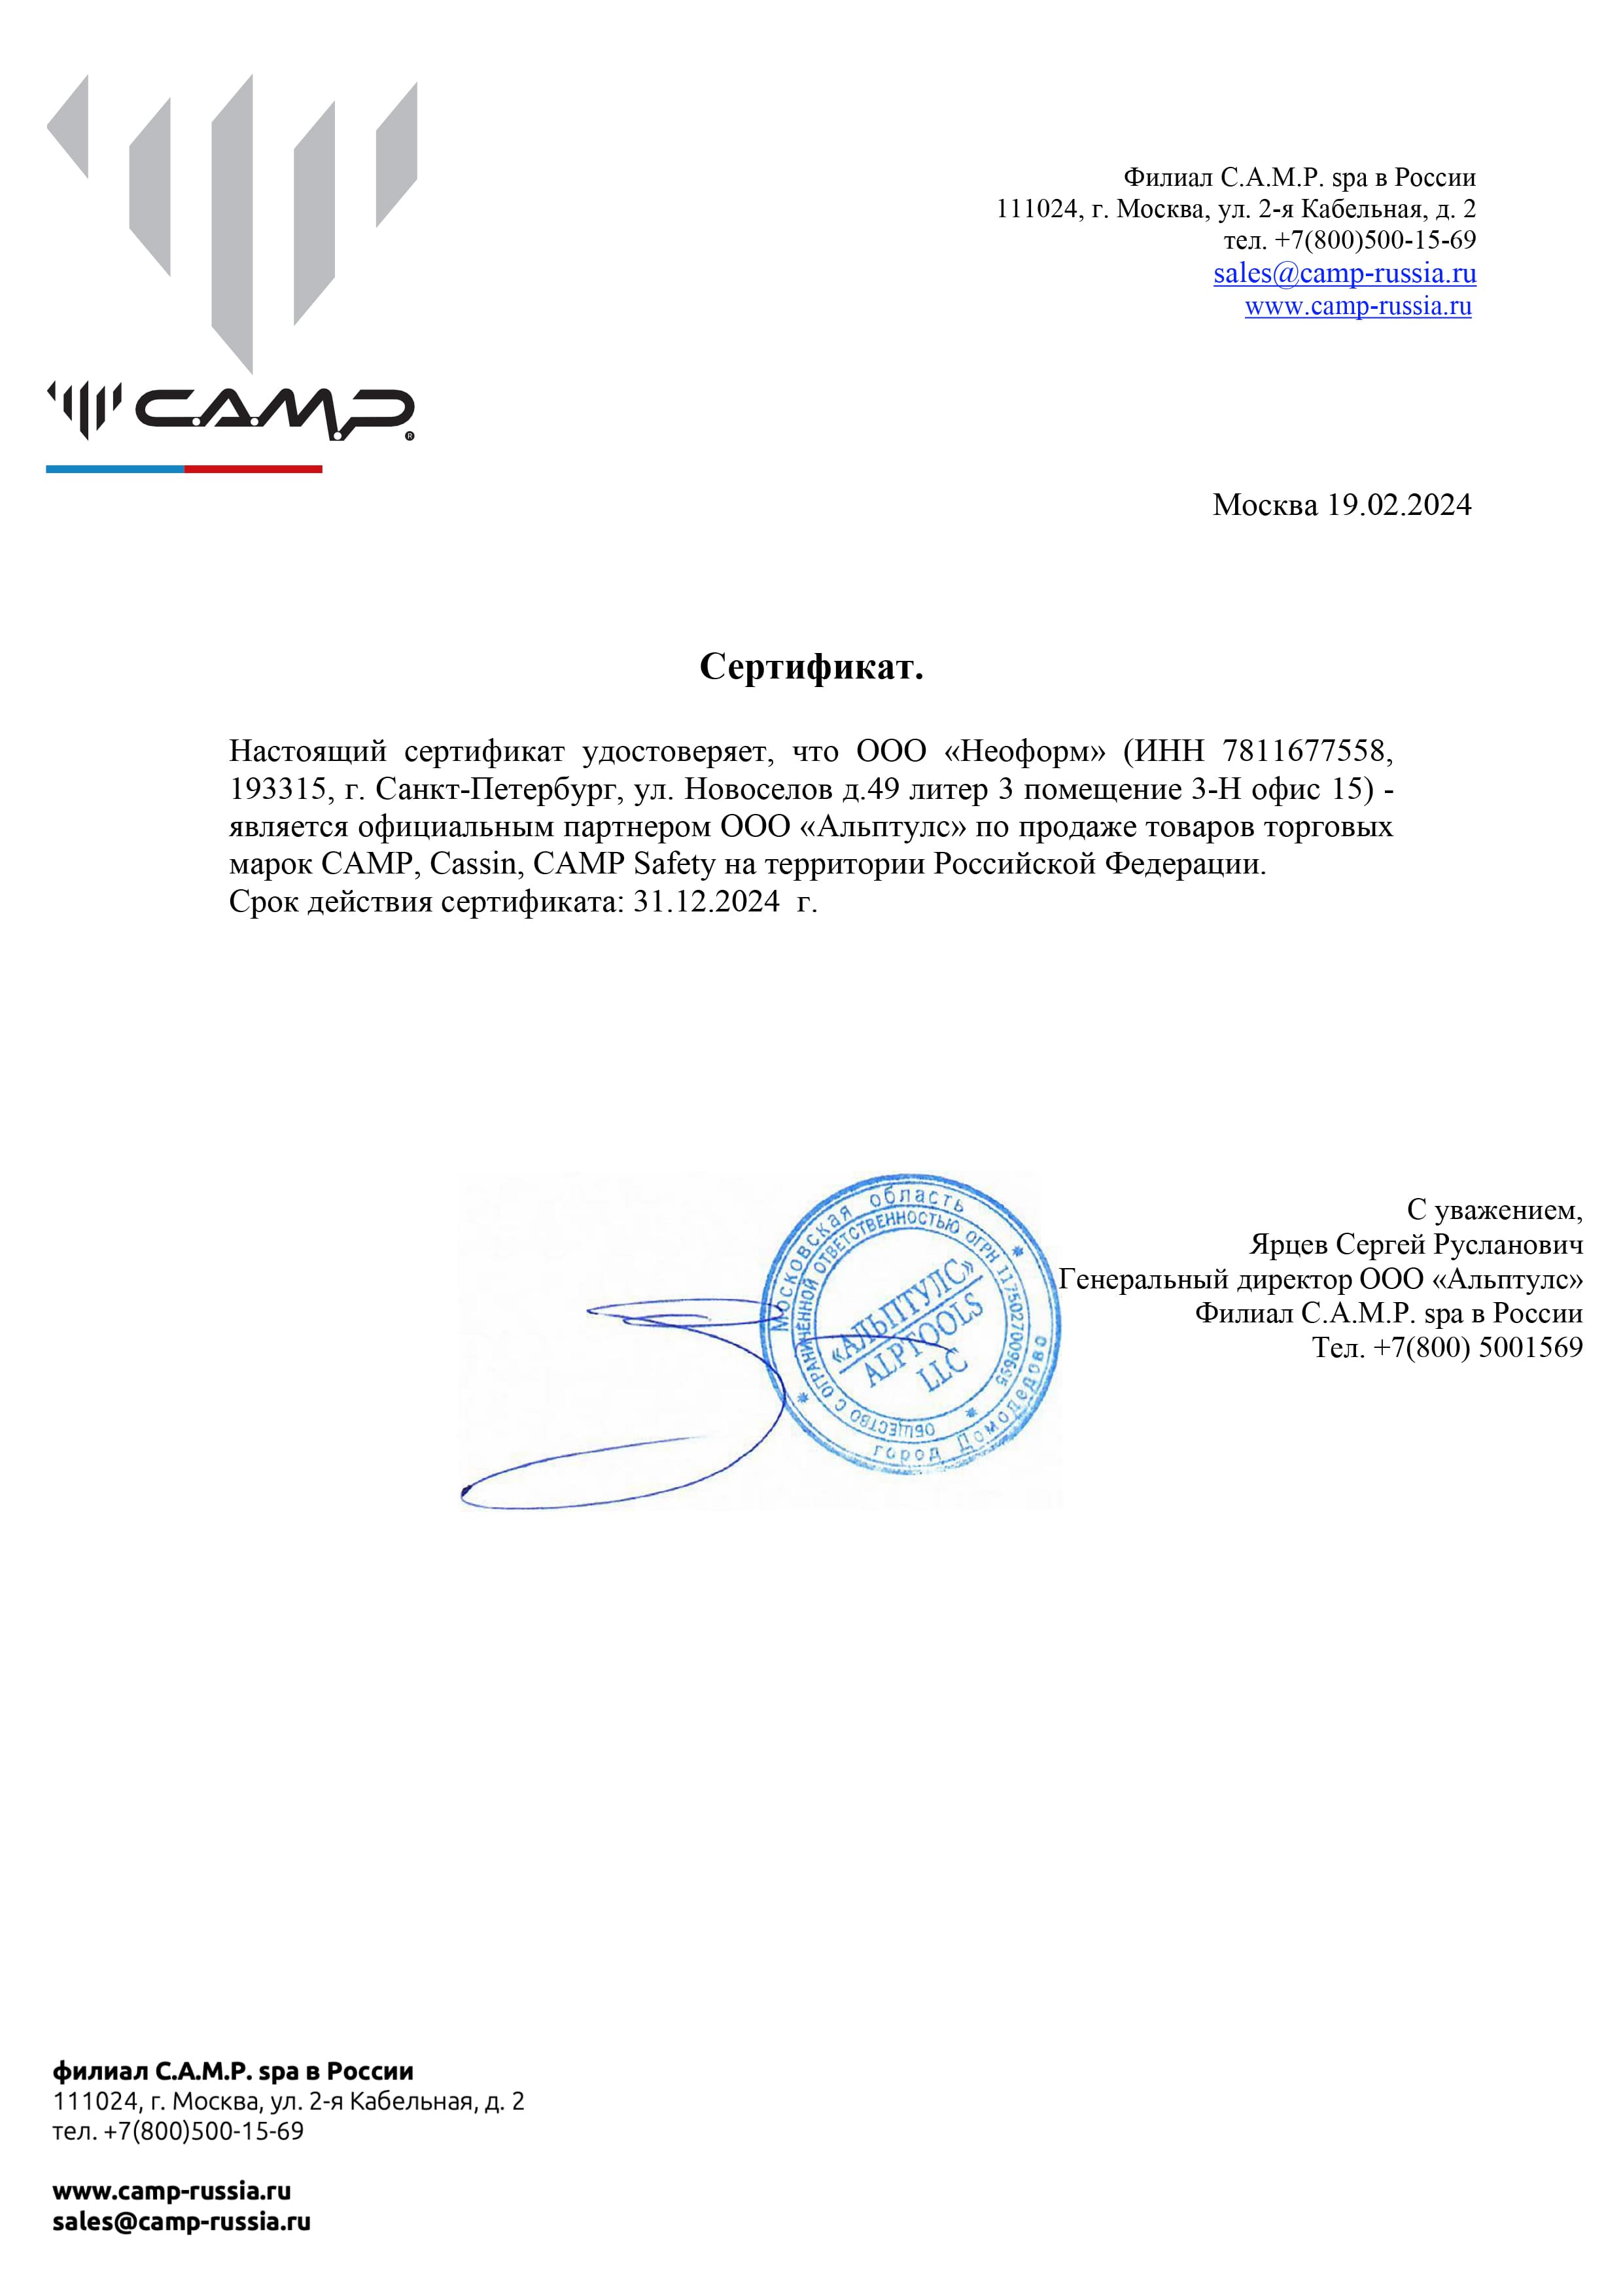 Сертификат дилера CAMP